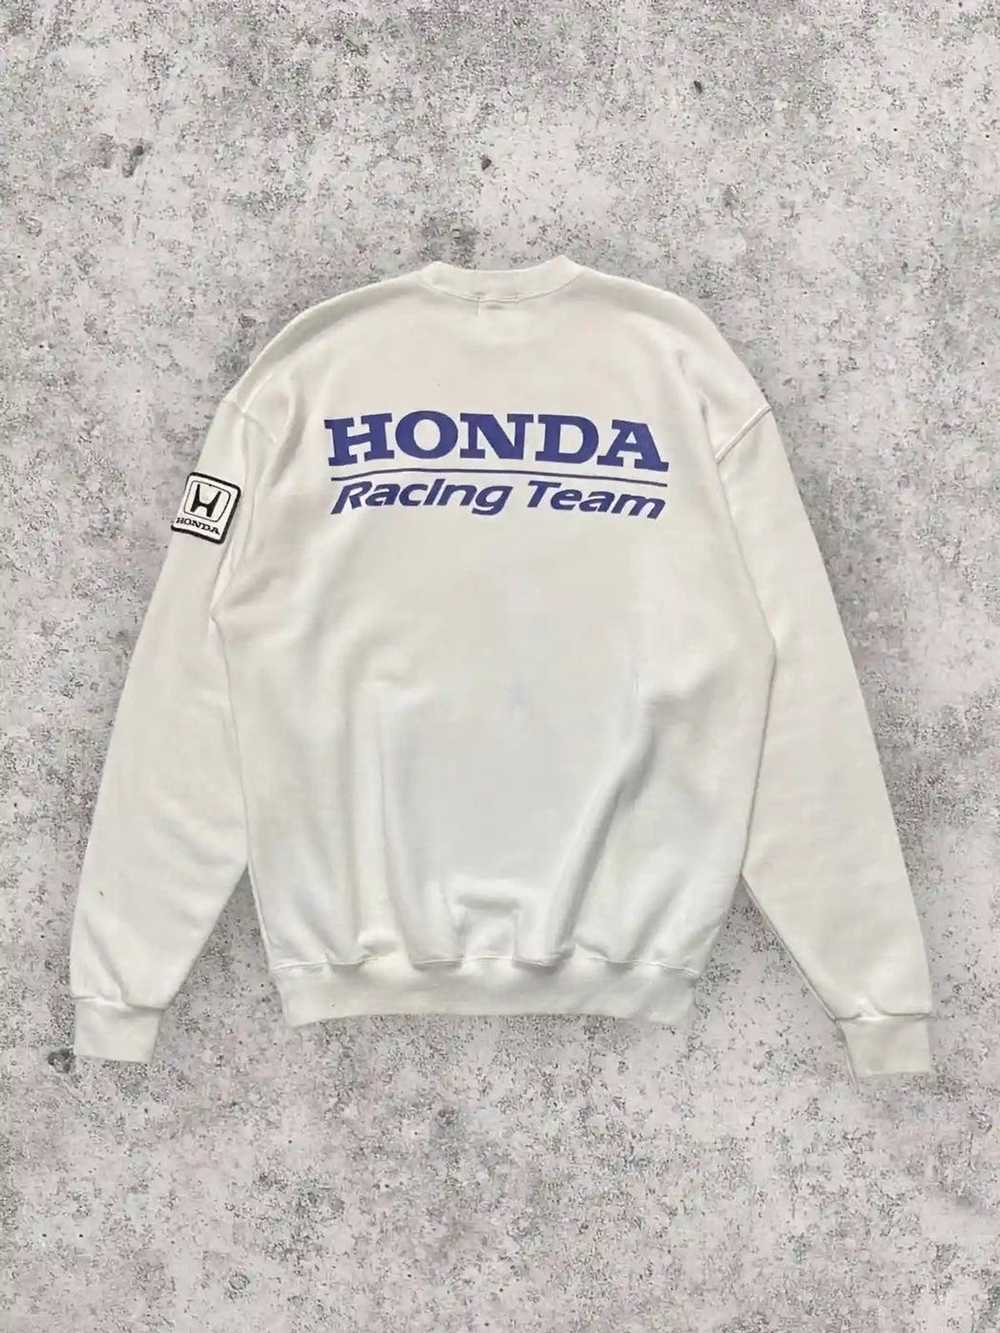 Honda × Japanese Brand × Vintage Vintage 90s Hond… - image 1